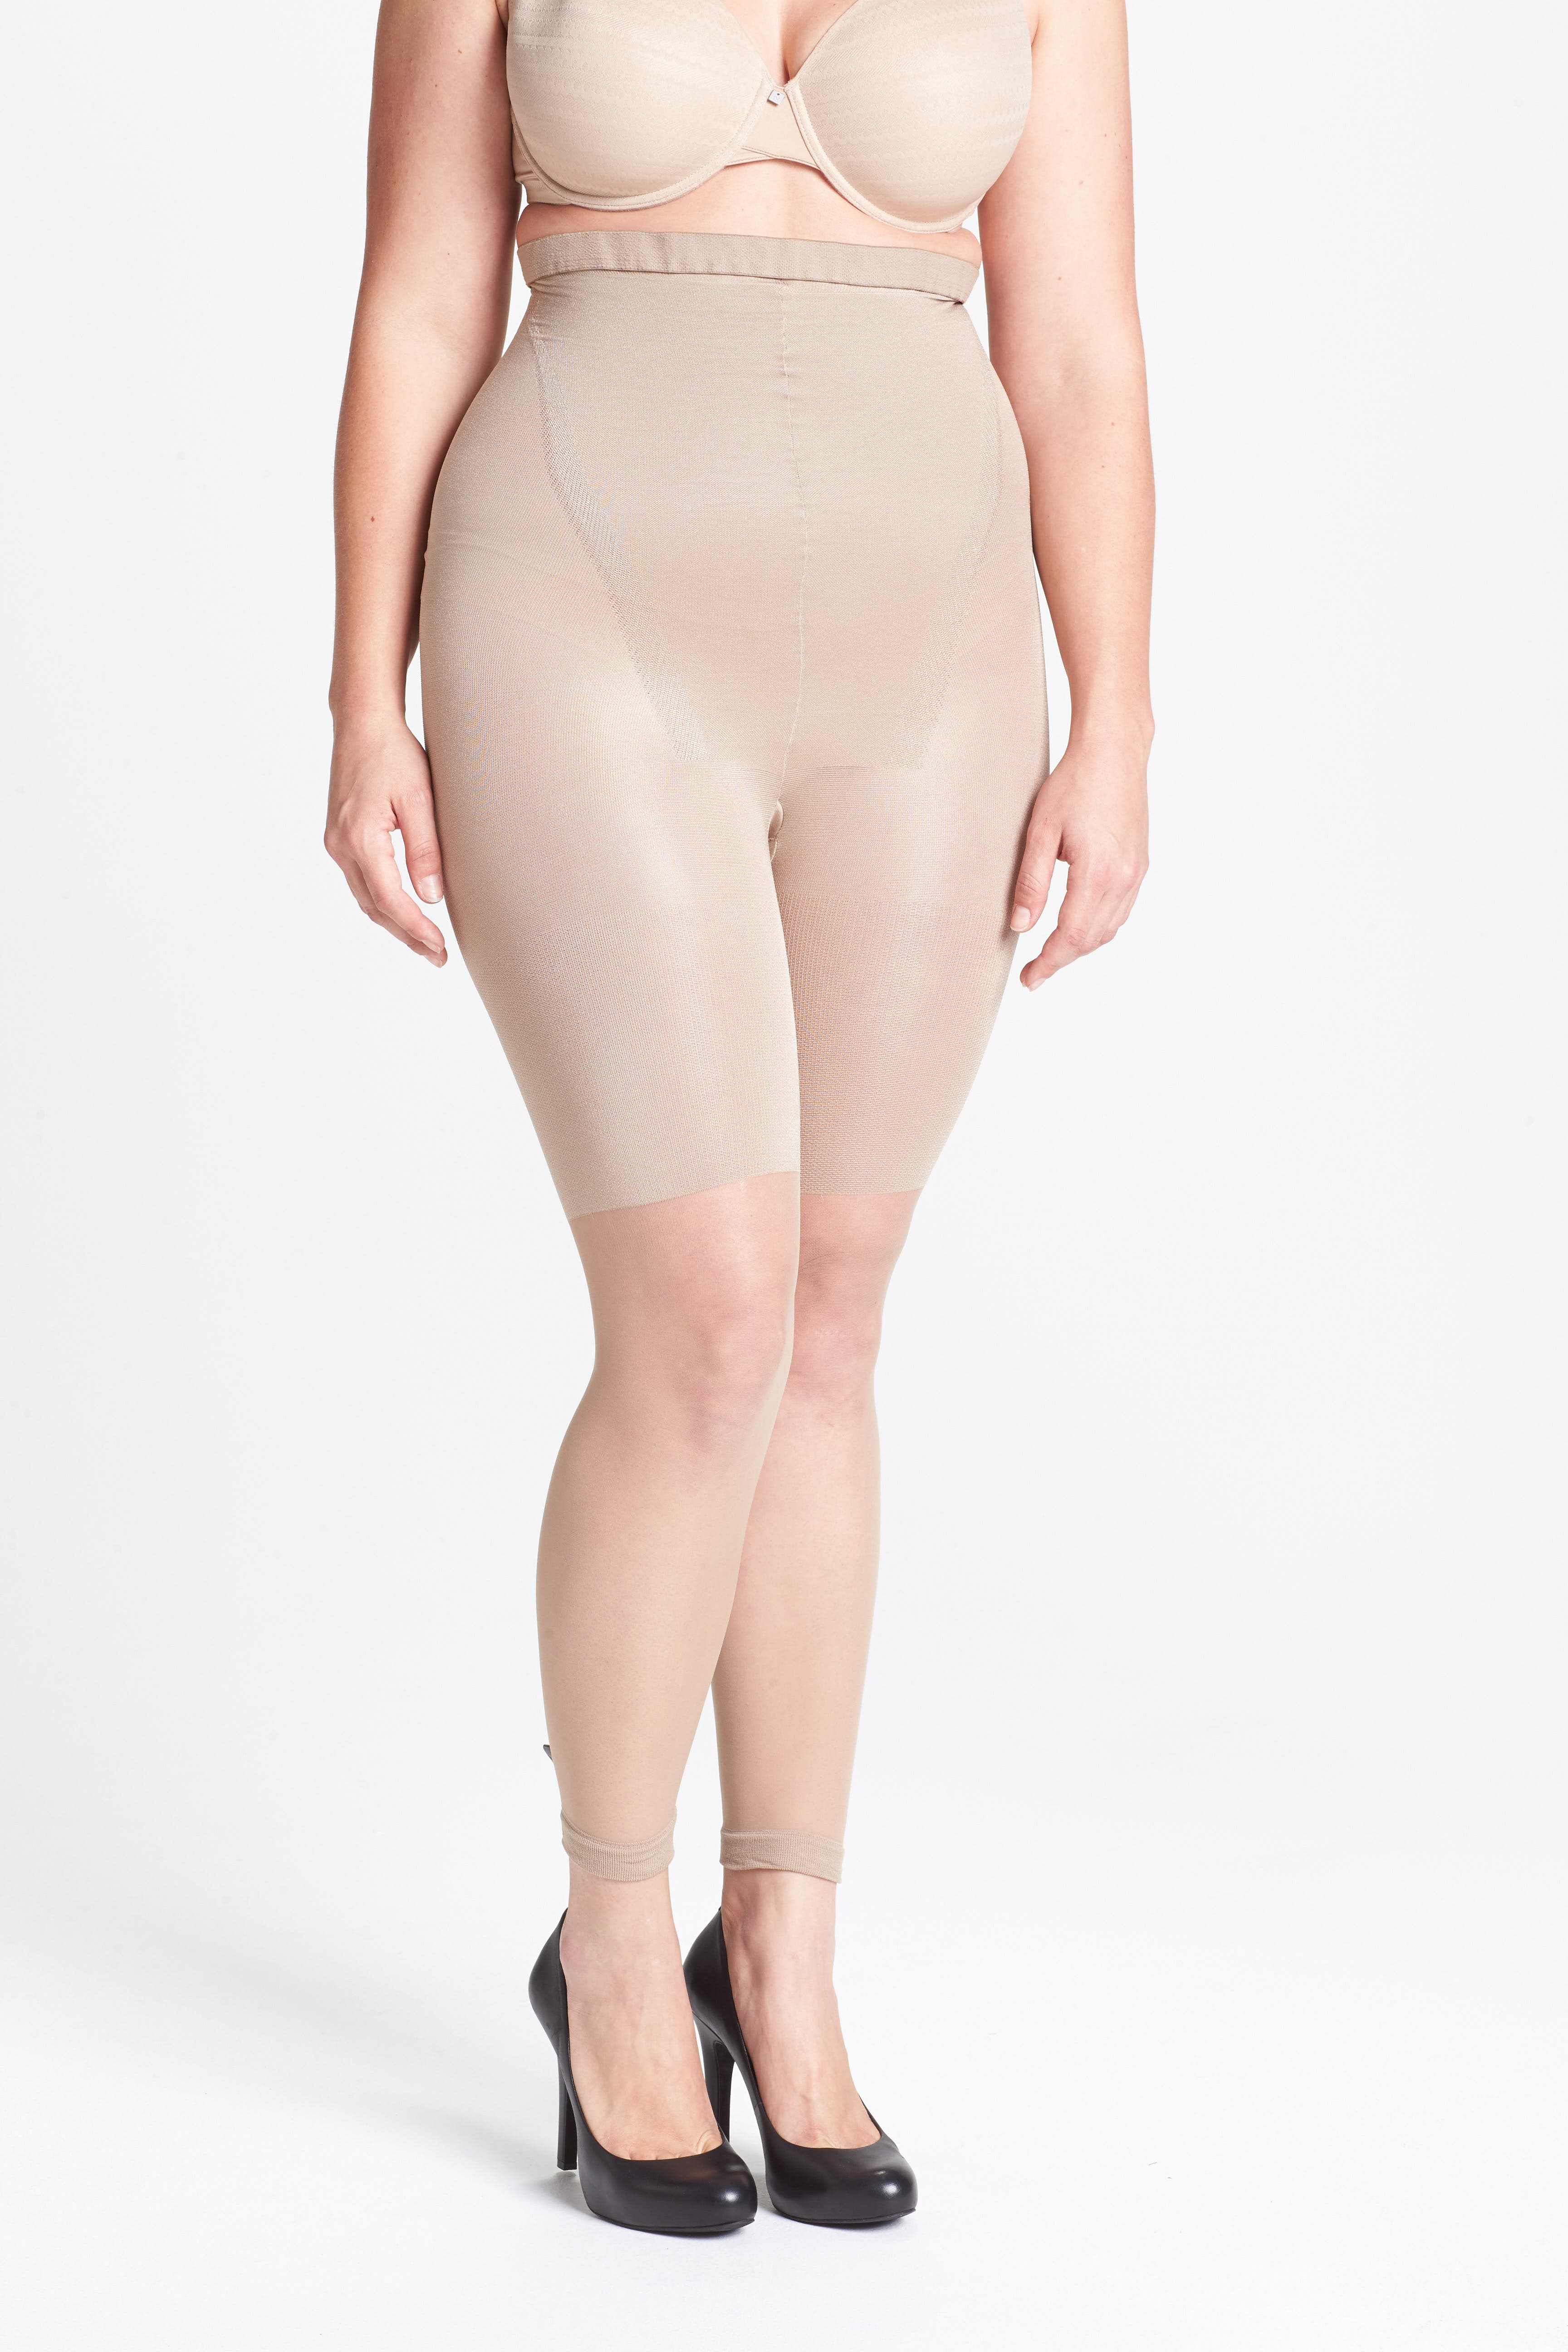 Details about   Spanx Women's 248770 Nude Higher Power High Waist Shaper Capri Size B